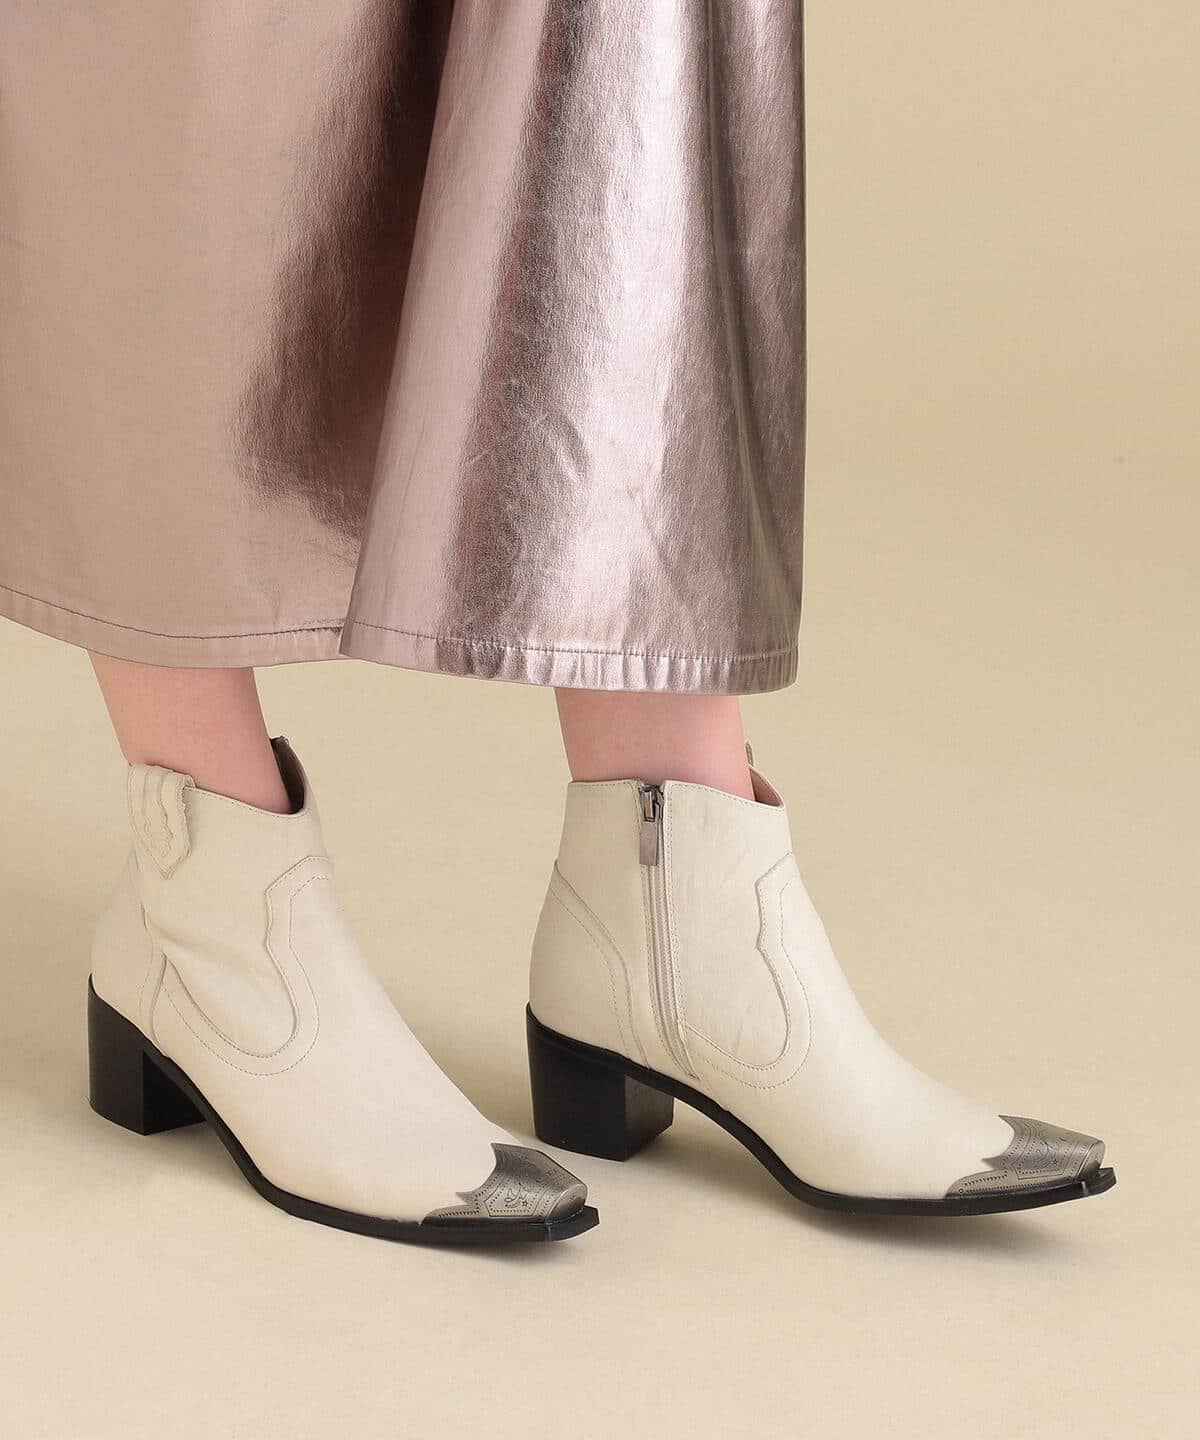 Ray BEAMS Ray BEAMS [Outlet] Mollini / Short boots (shoes